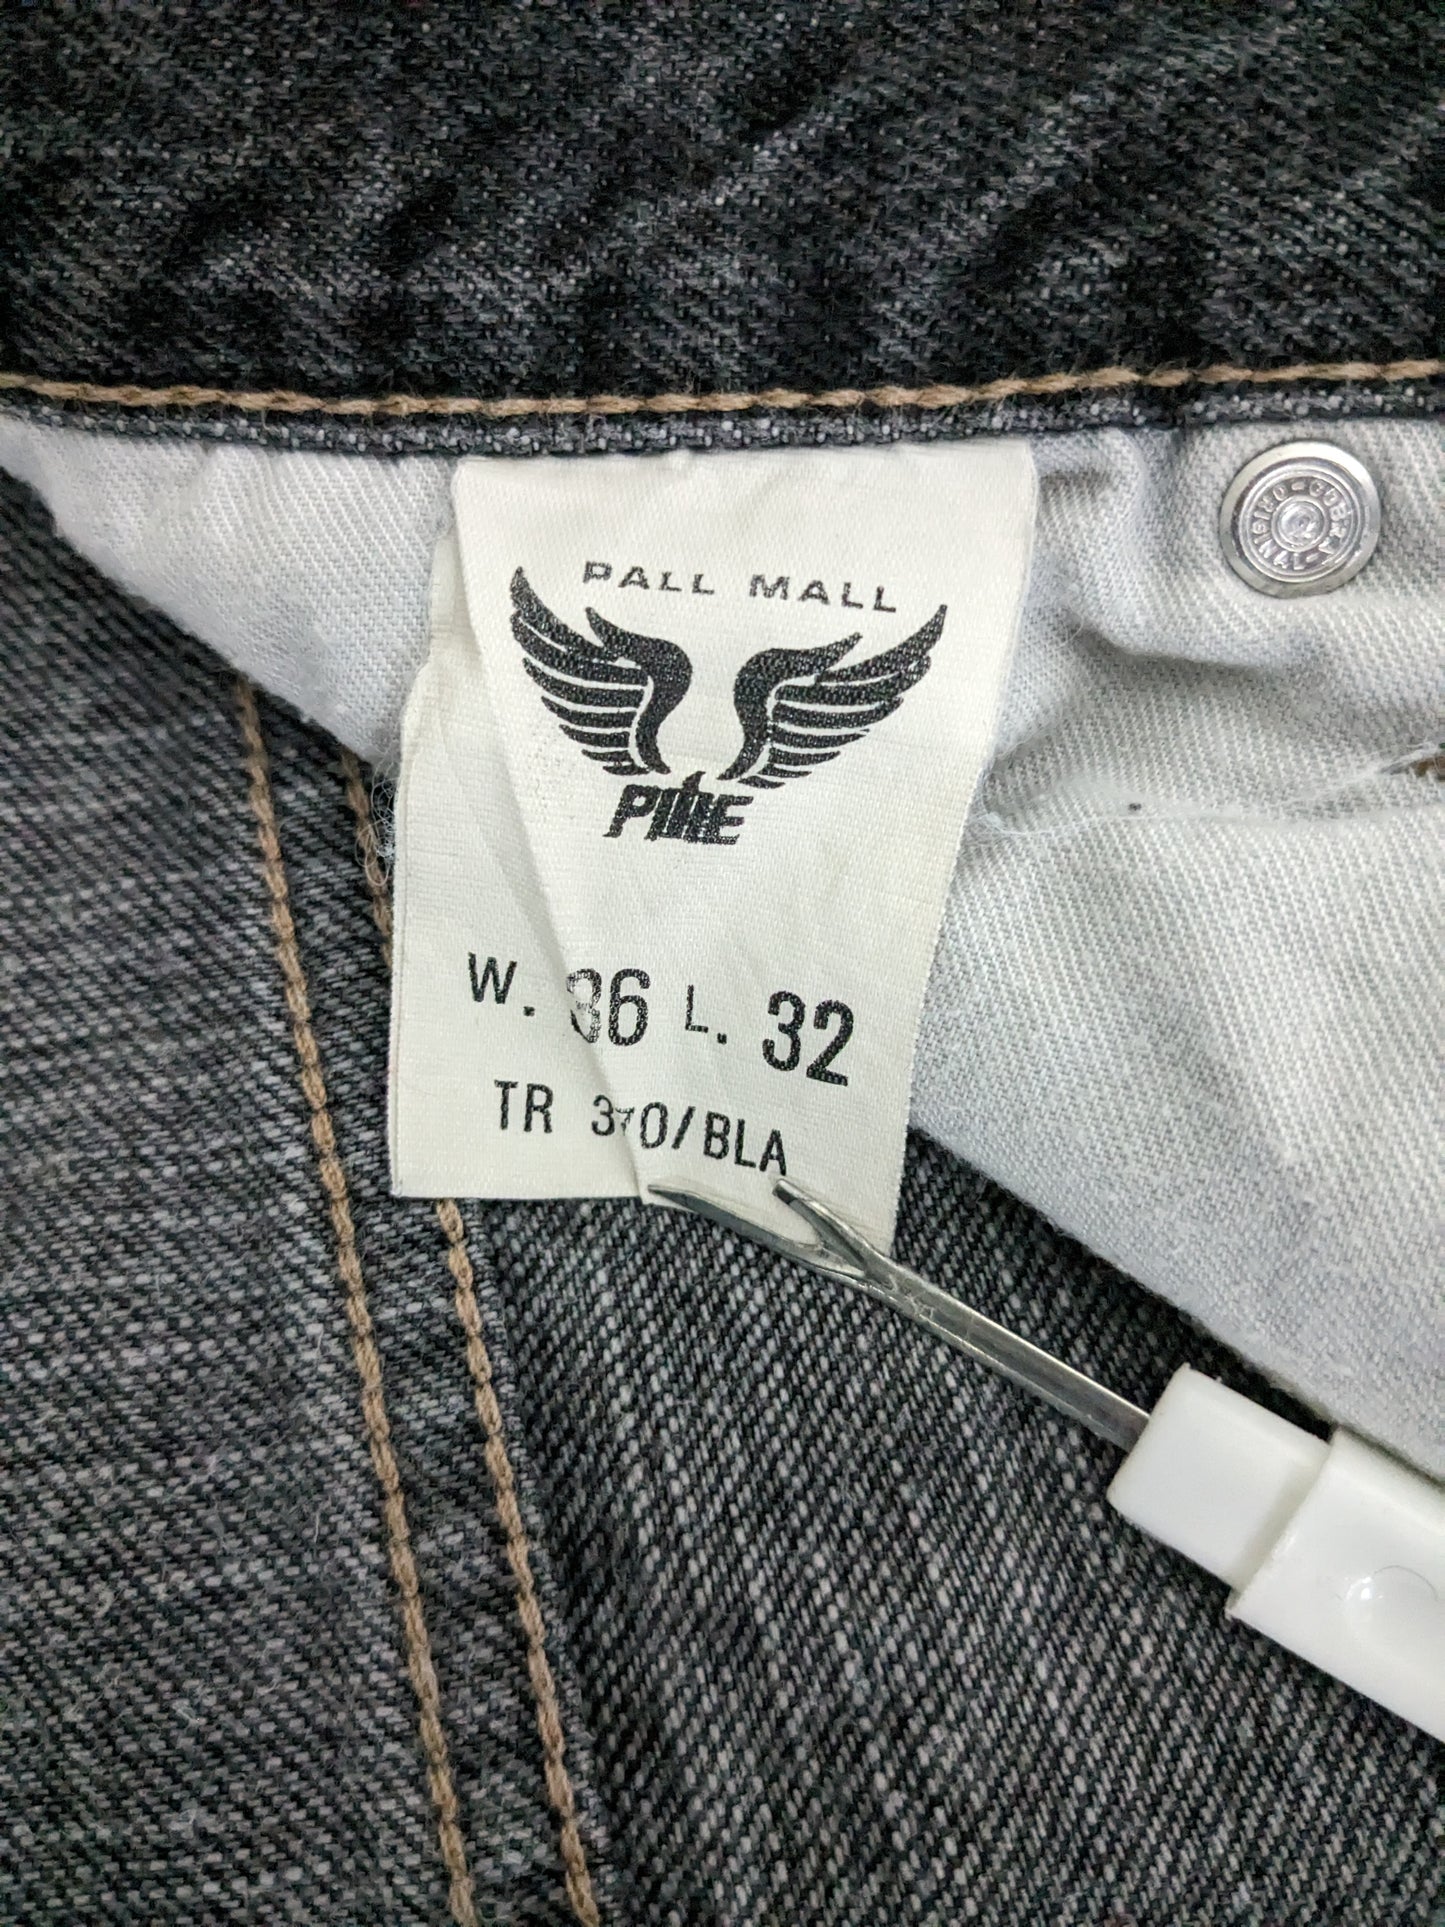 PME / Pall Mall Jeans. Gris negro mezclado. Tamaño W36 - L32. Tipo "Dakota".